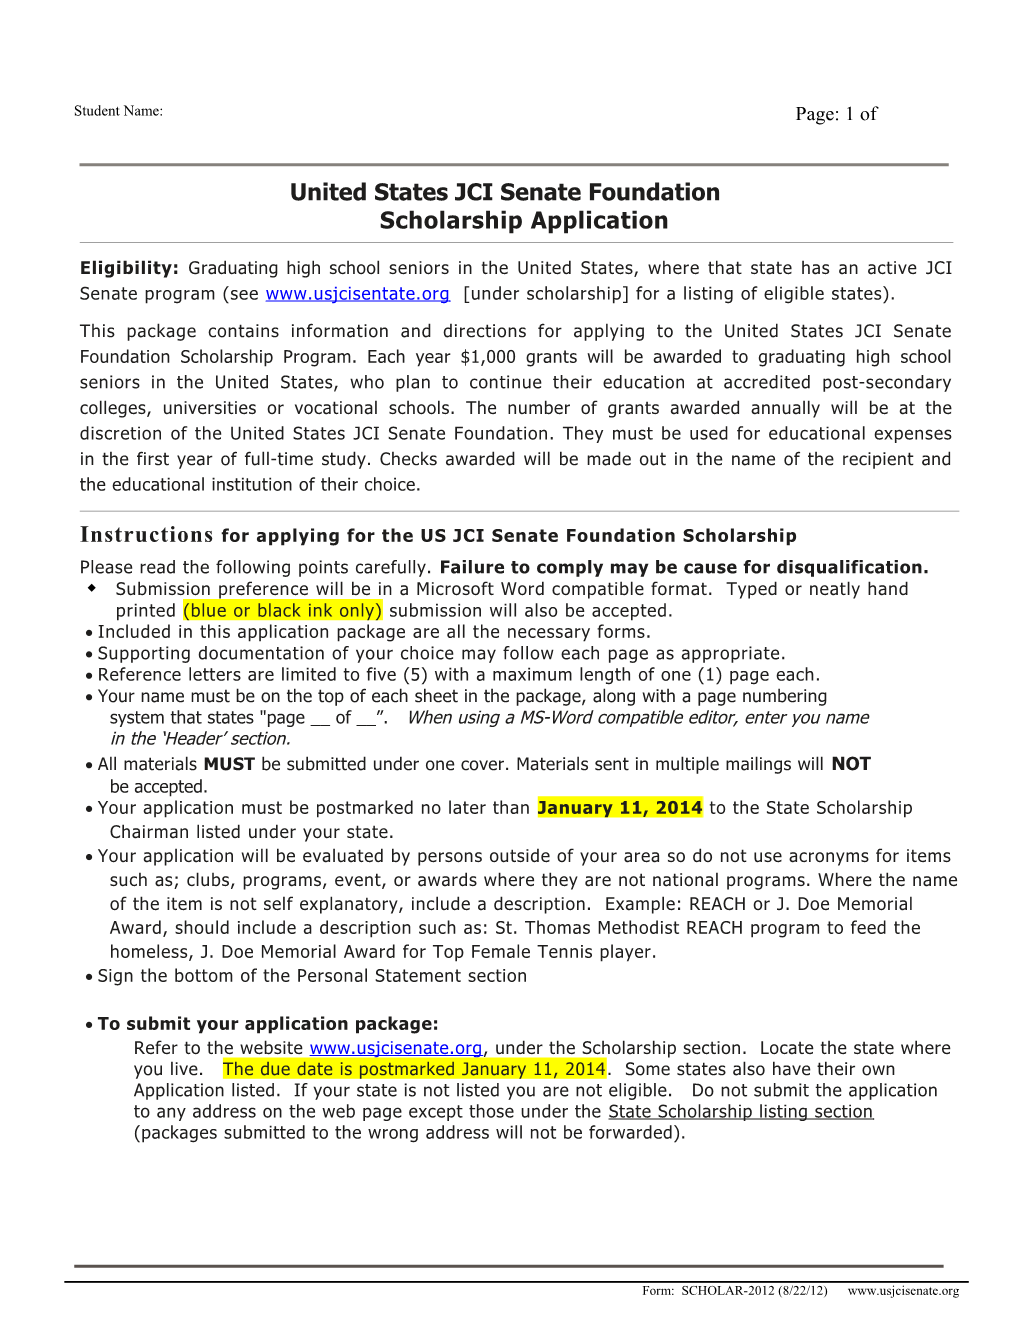 United States JCI Senate Foundation Scholarship Application s1